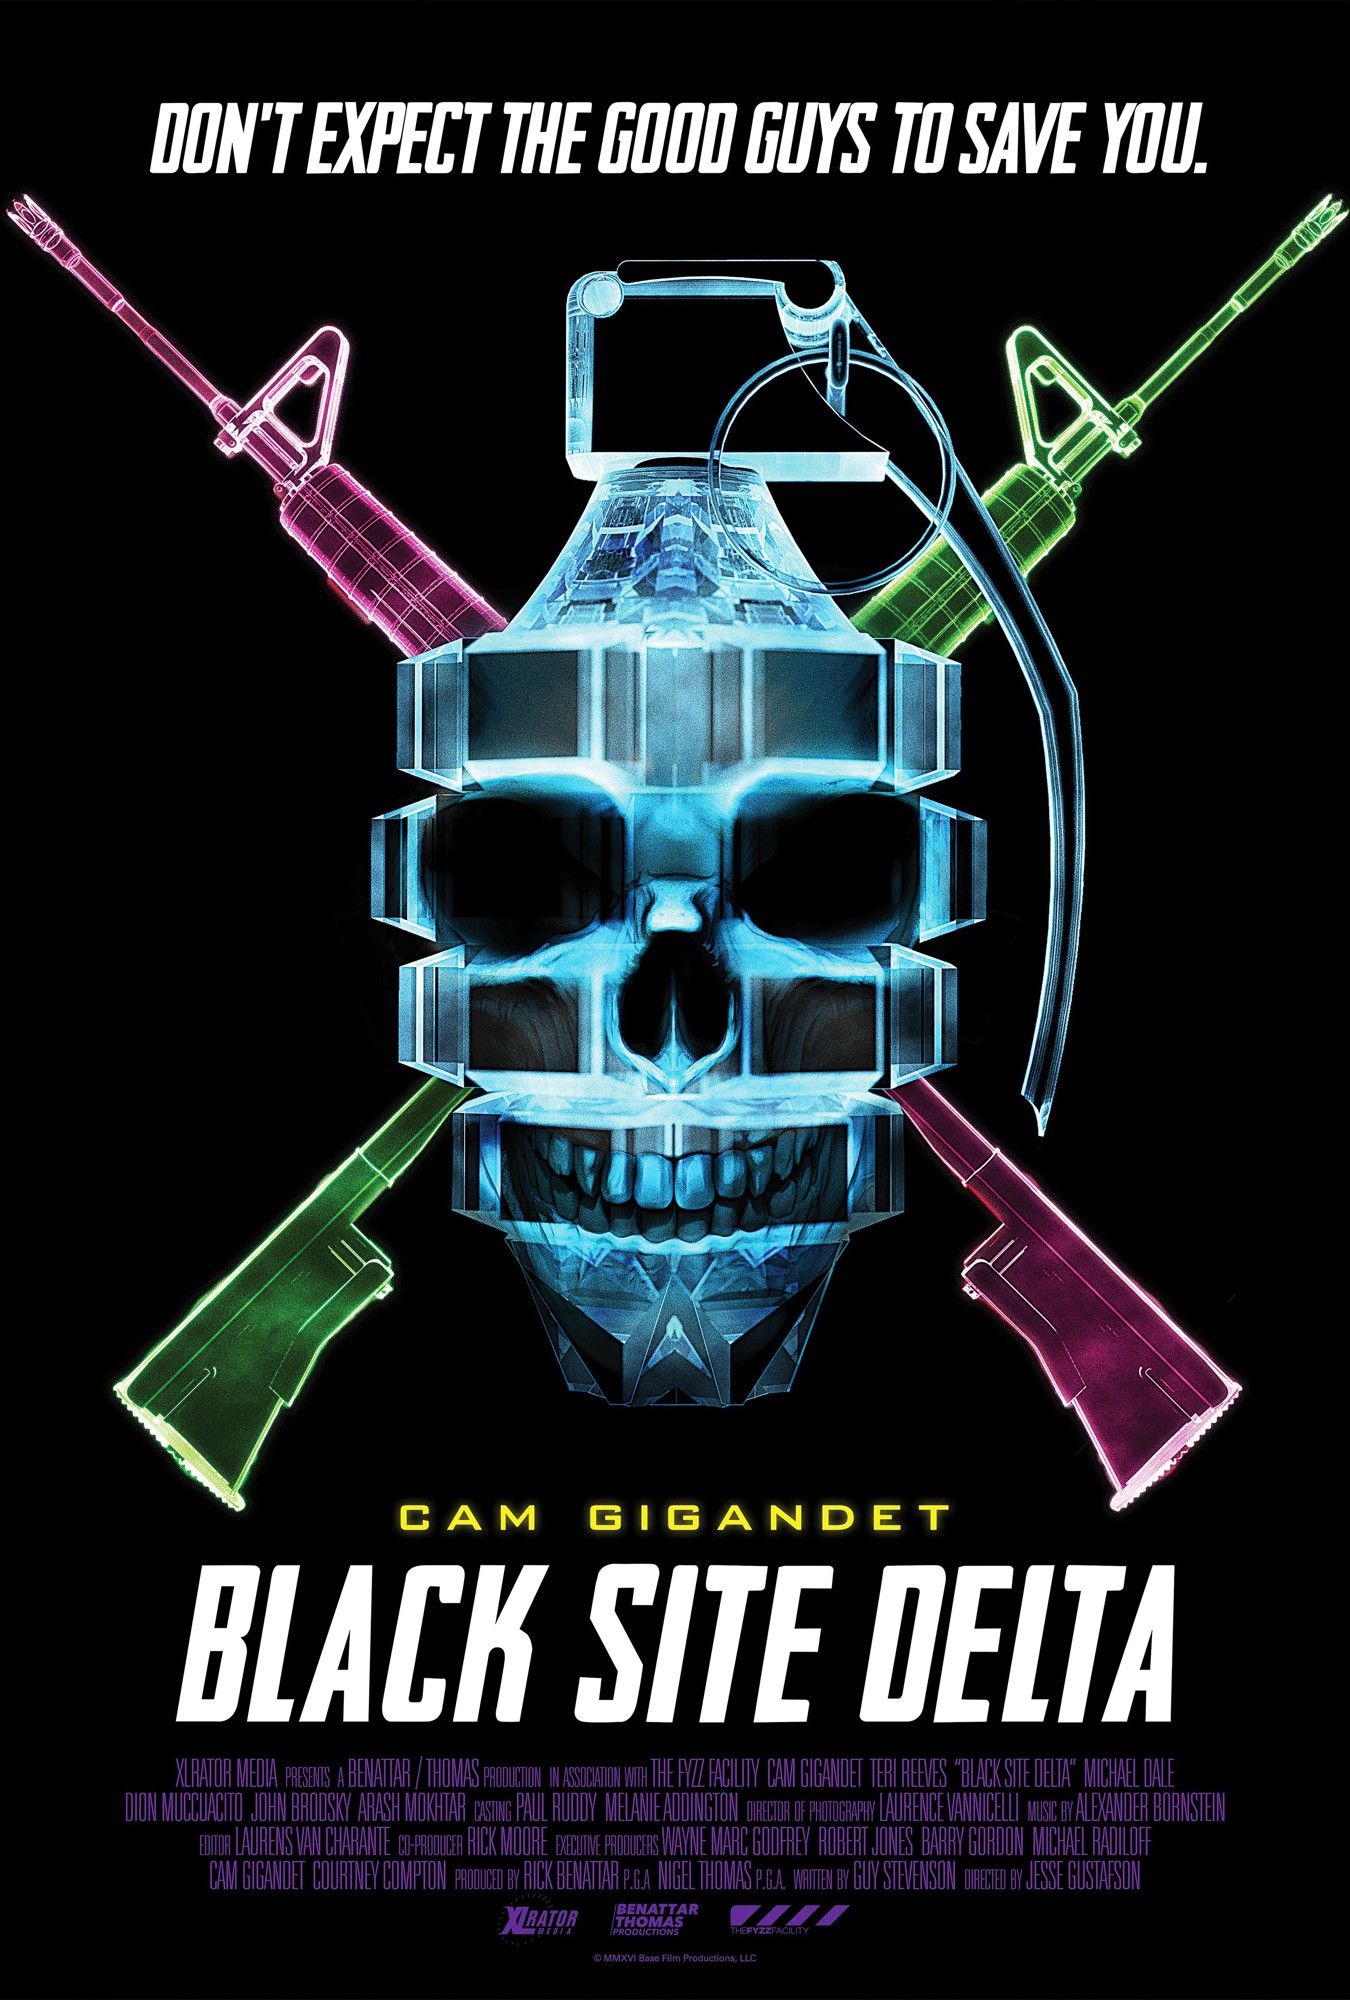 Black Site Delta (2017) Pictures, Photo, Image and Movie Stills